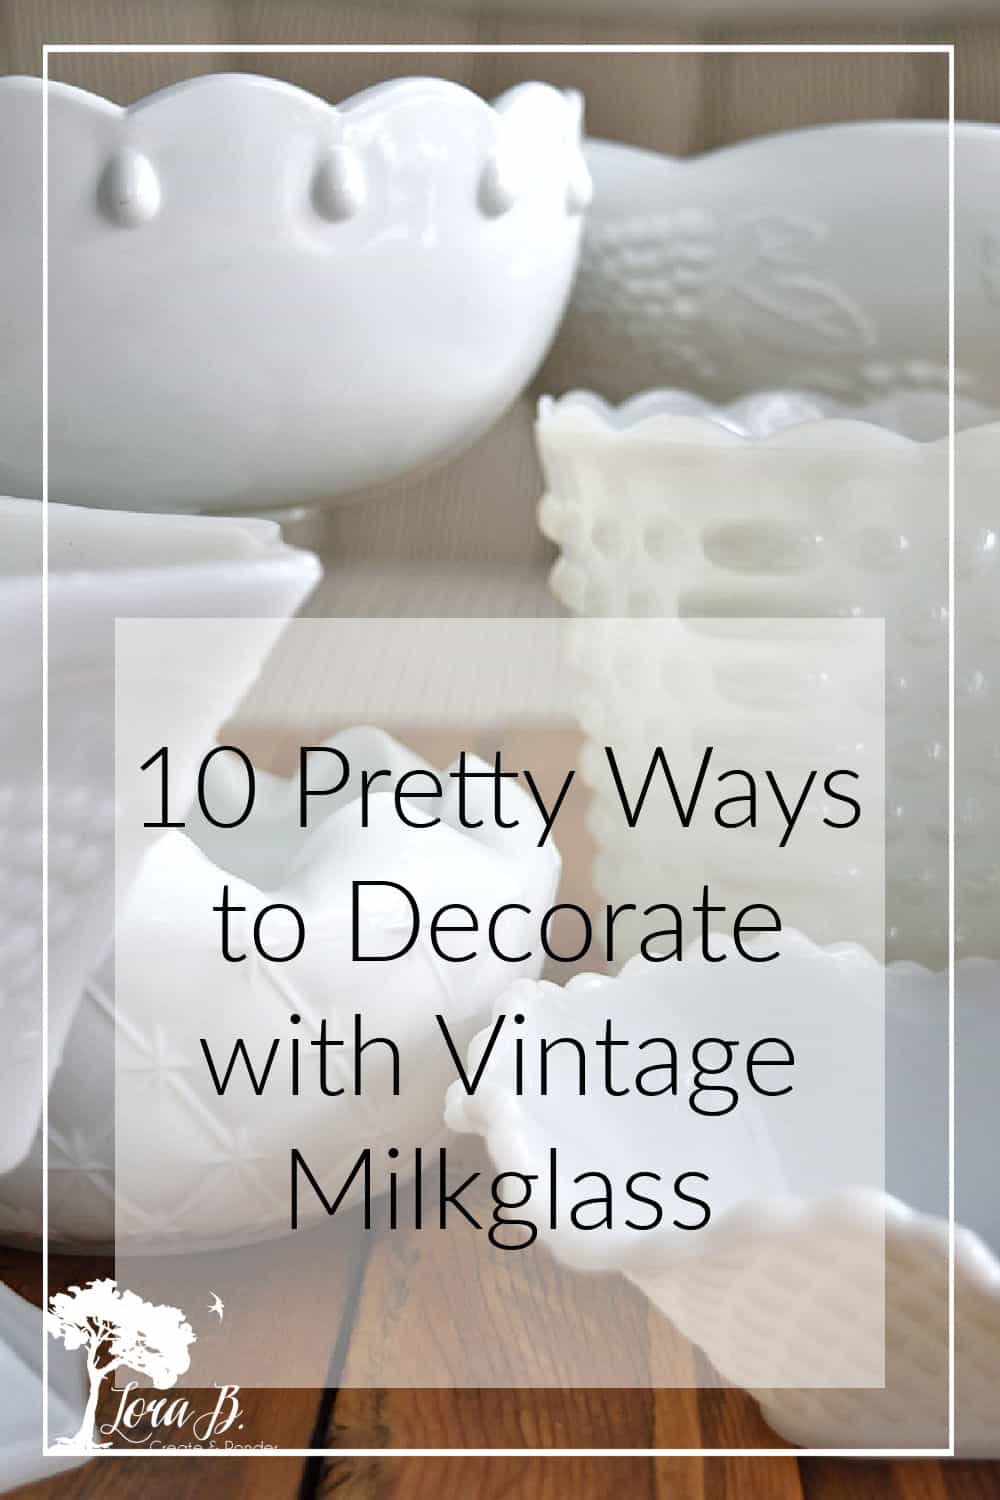 10 Pretty Ways to Decorate with Vintage Milkglass